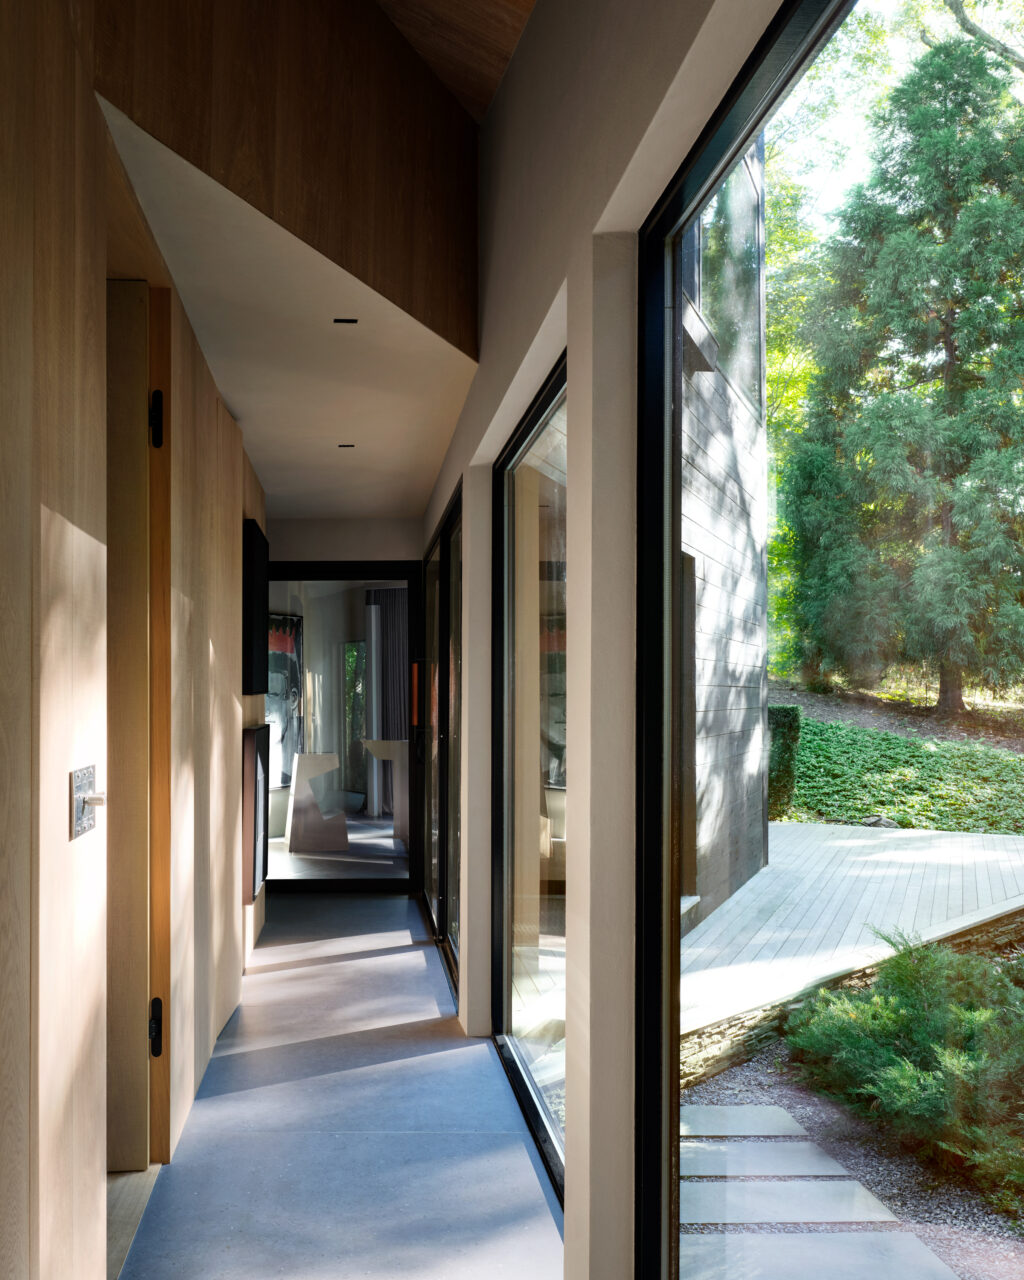 A narrow, linear hallway in a modern home with big windows